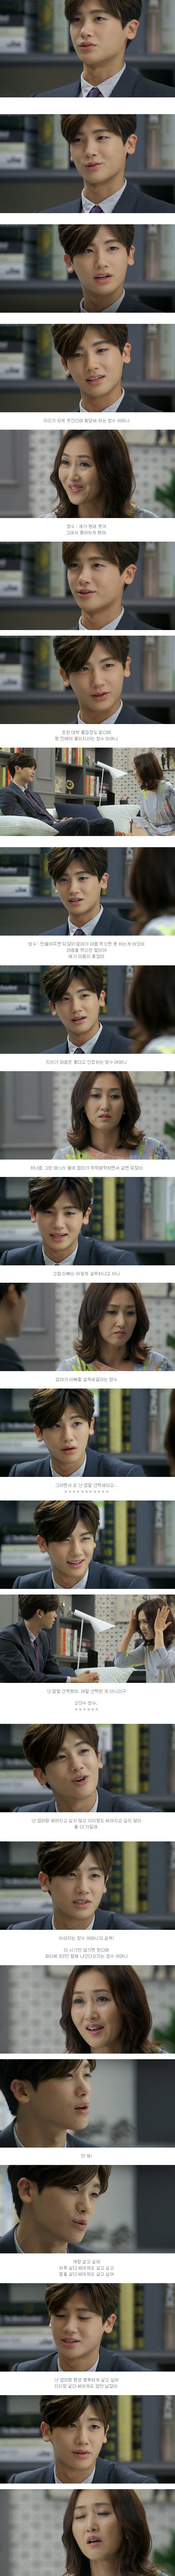 episode 16 captures for the Korean drama 'High Society'